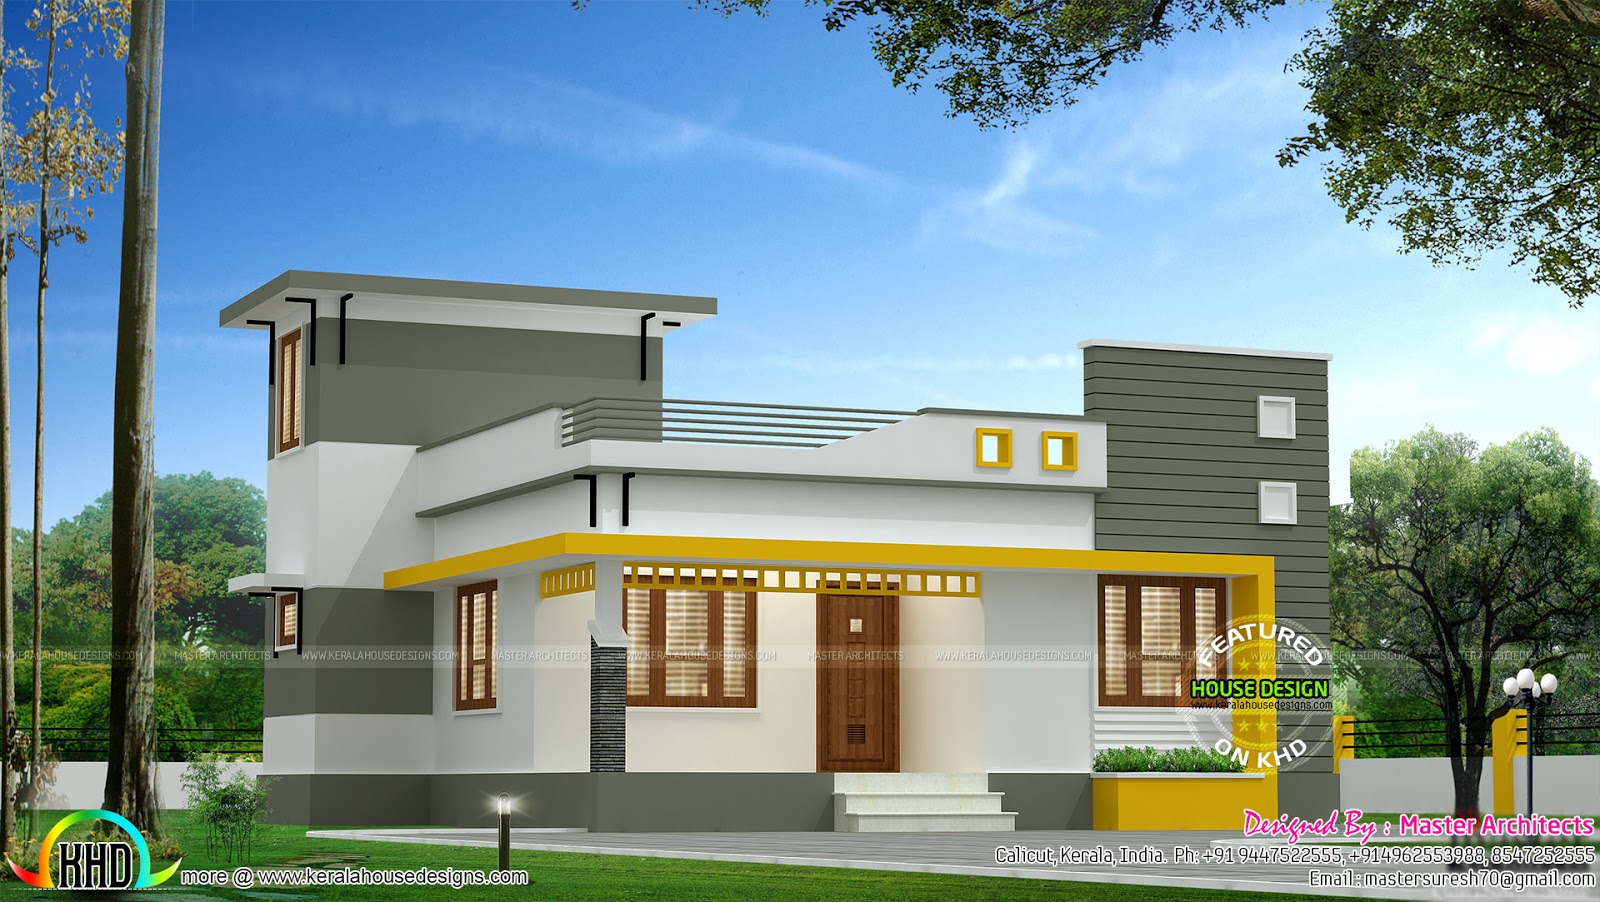  3  bedroom  single  floor  modern  architecture home  Kerala 